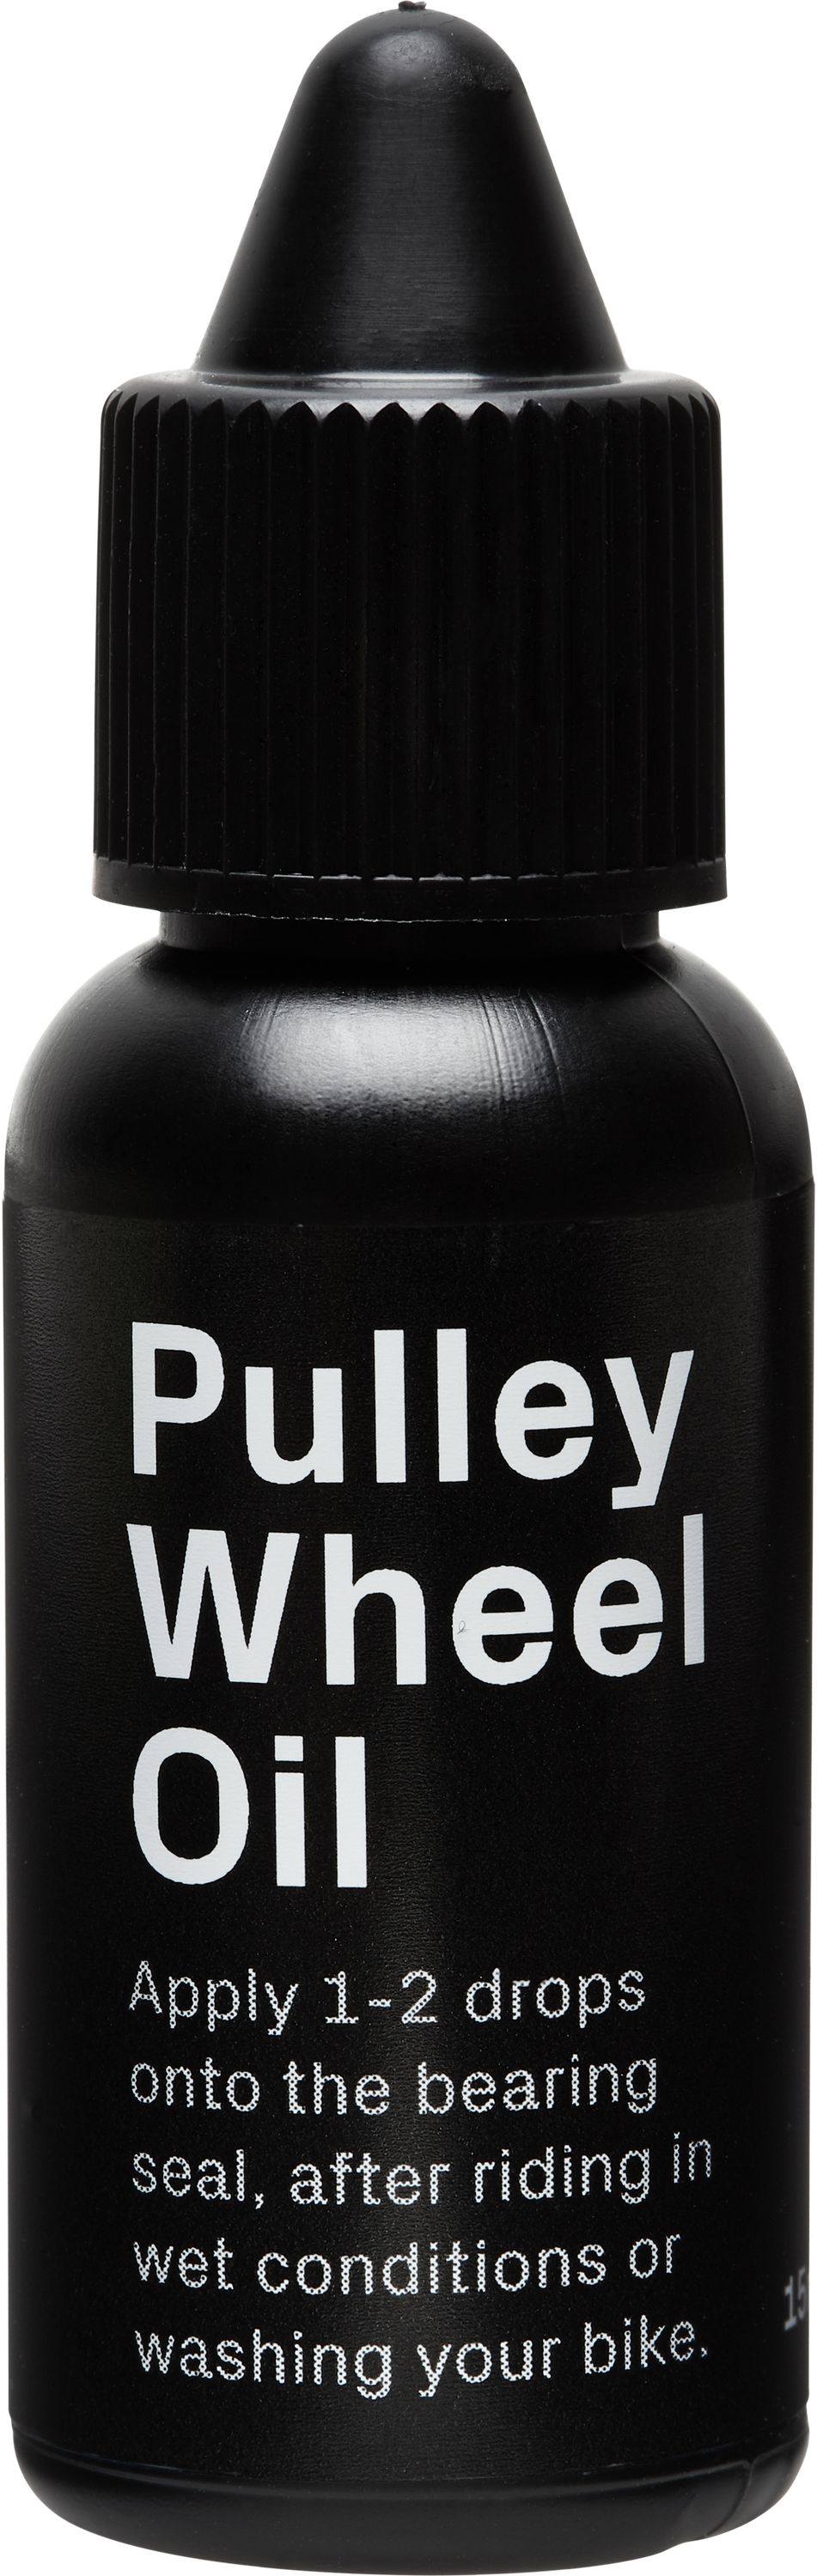 Oil for Pulley Wheel Bearings 